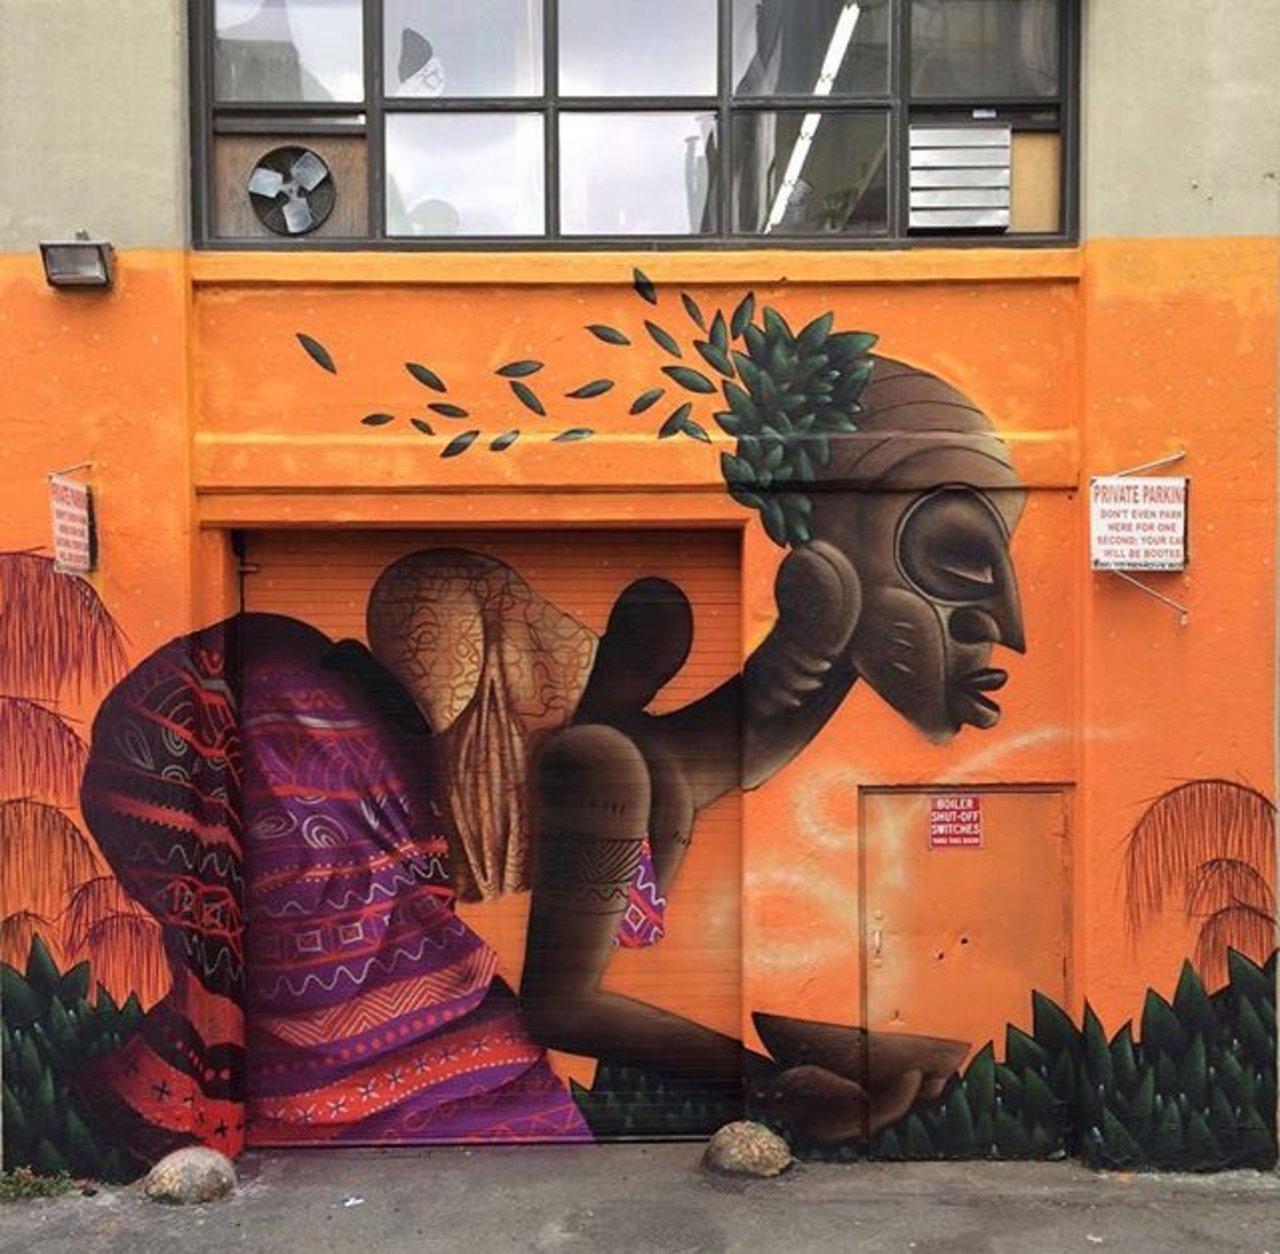 New Street Art by Alexandre Keto in NYC 

#art #graffiti #mural #streetart https://t.co/uX4kI6JwOg